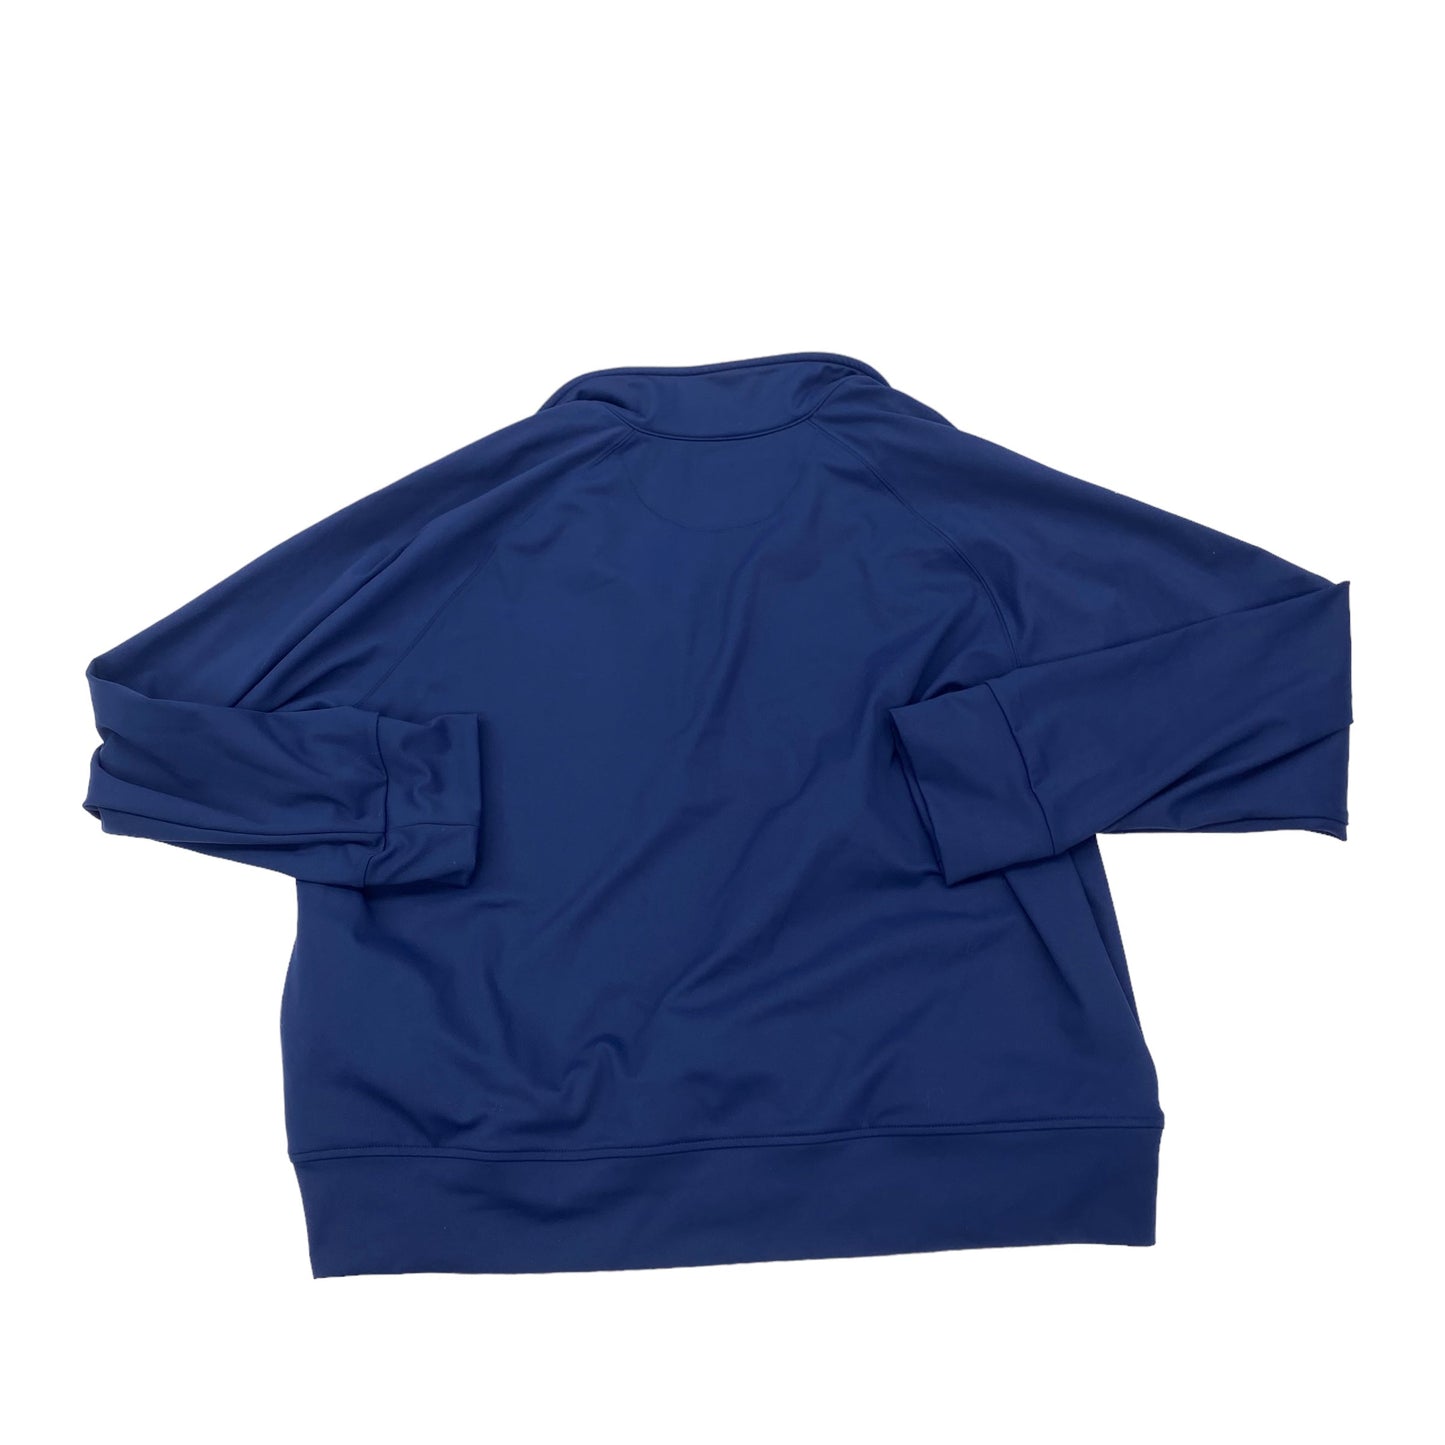 Athletic Sweatshirt Collar By Cmc  Size: Xl